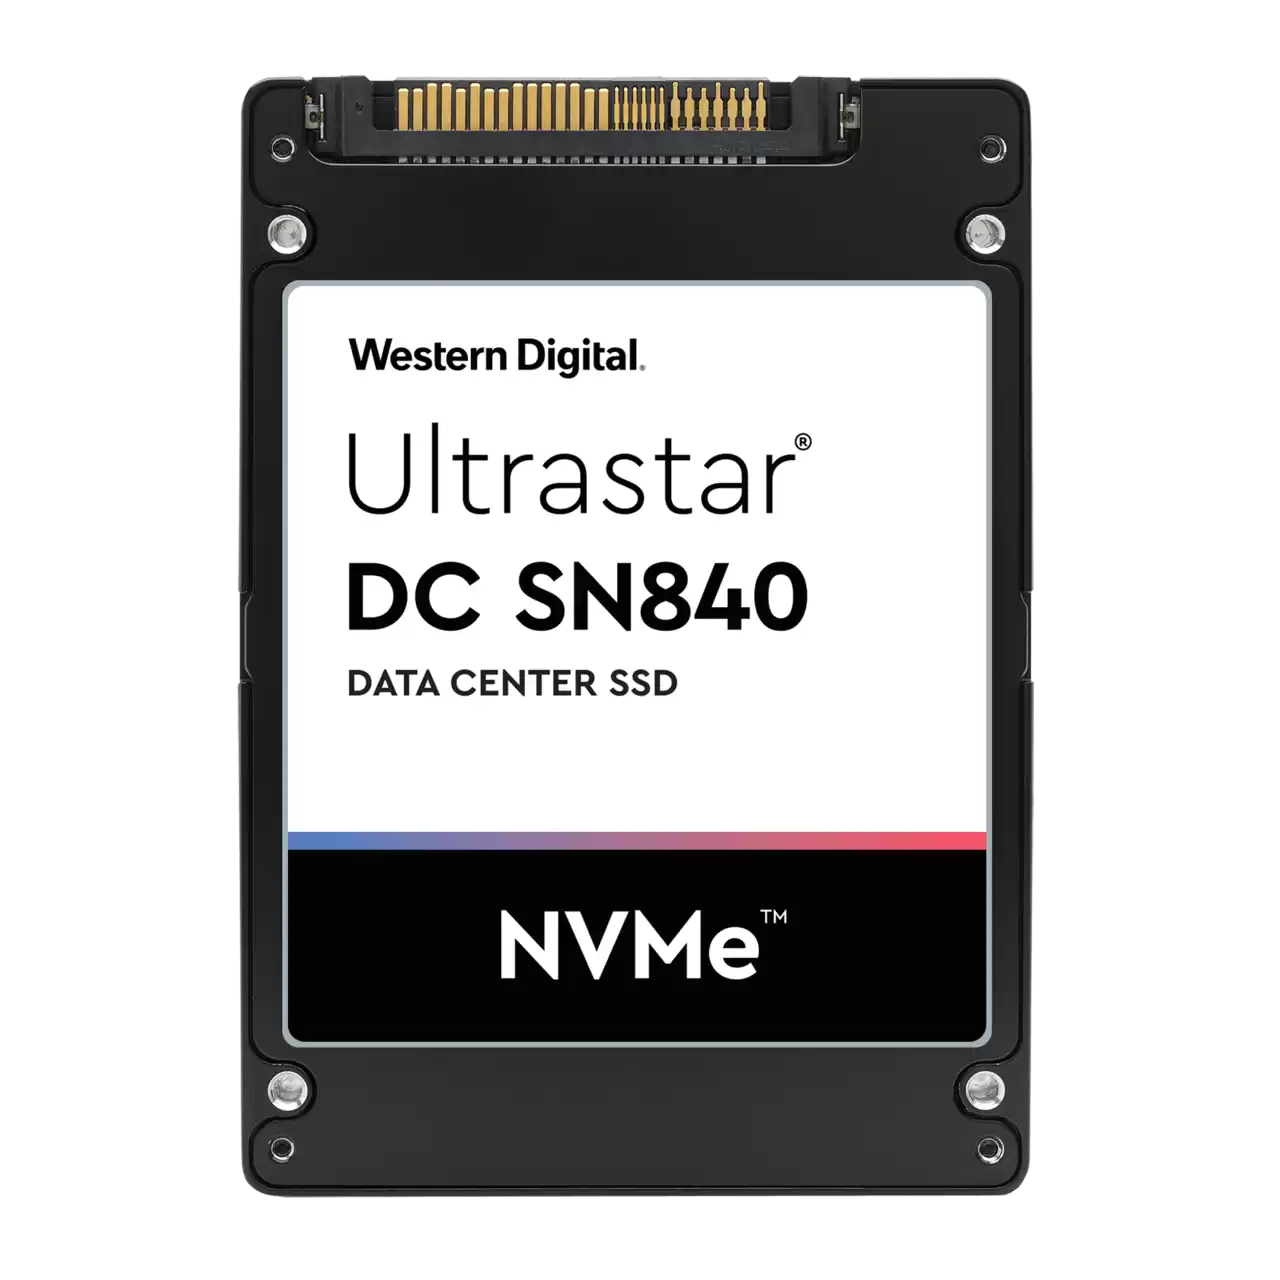 Ultrastar DC SN840